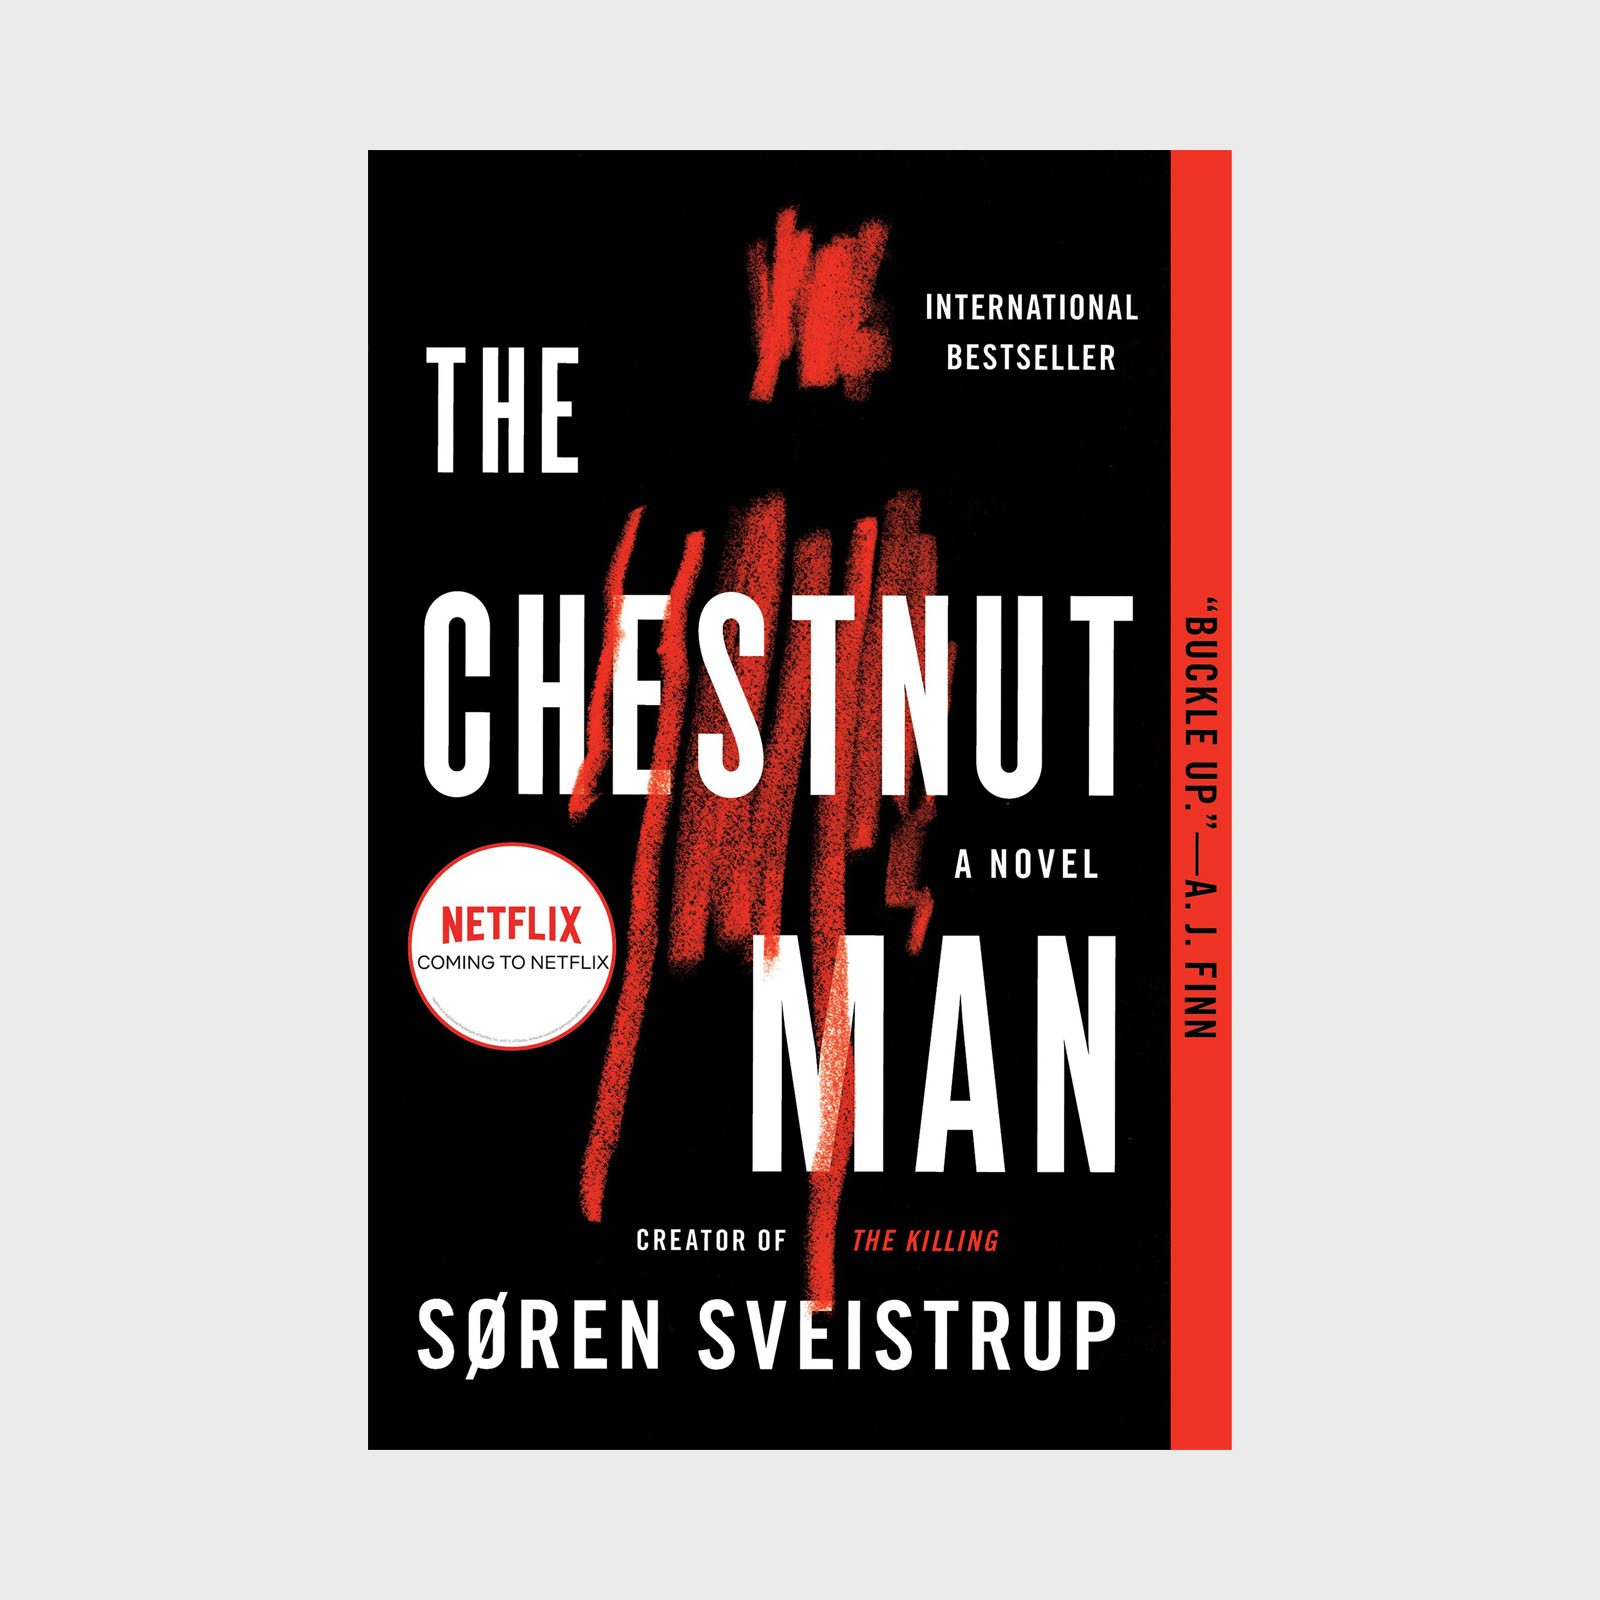 6 The Chestnut Man By Soren Sveistrup, 2018 Via Amazon